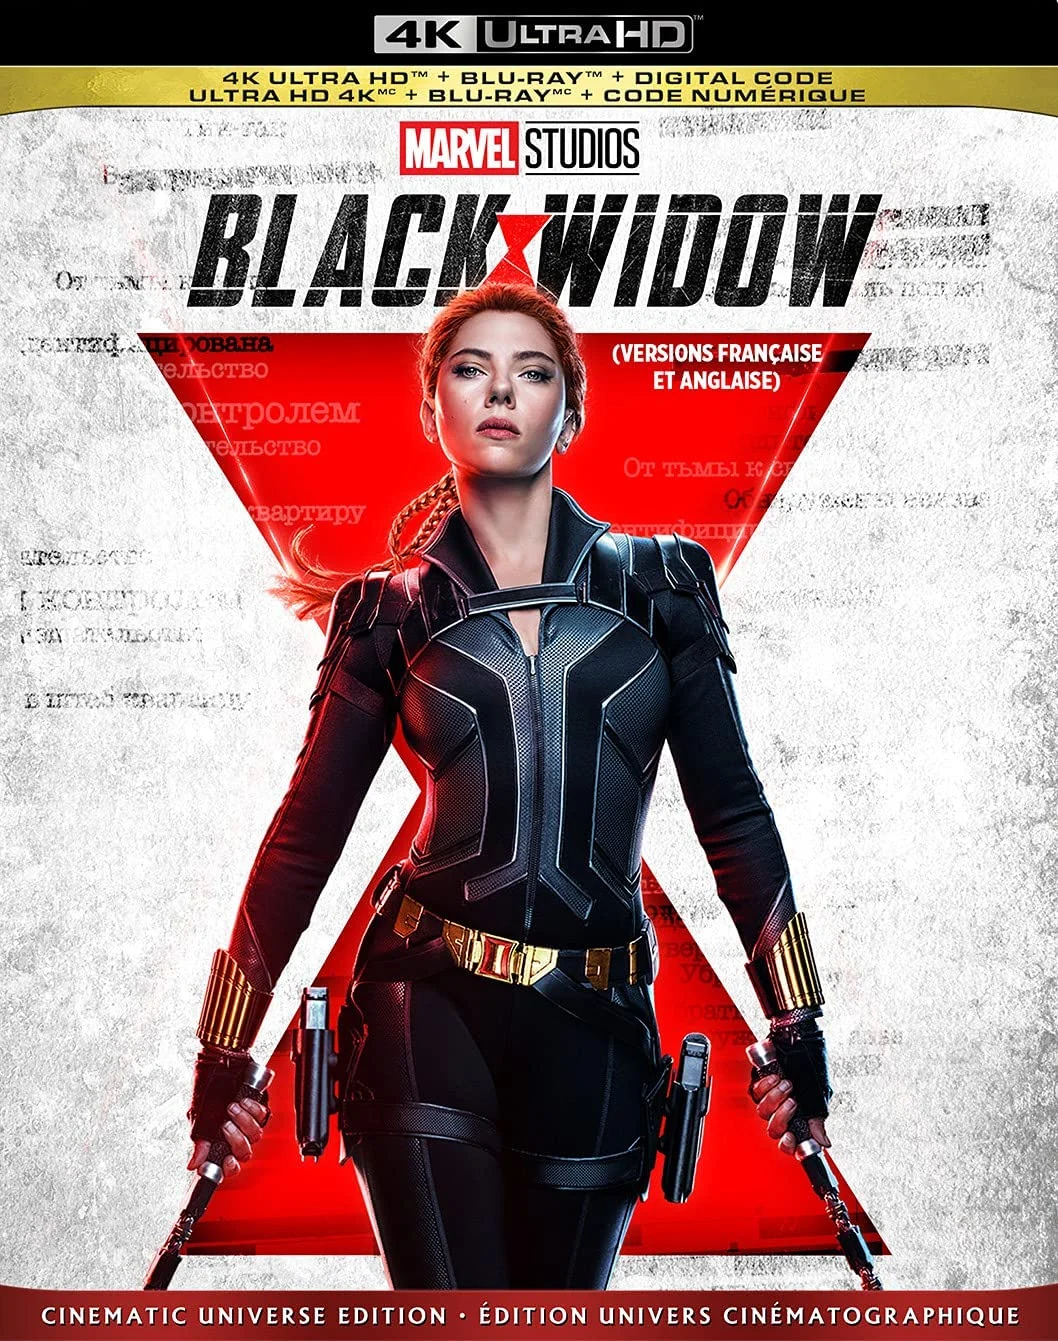 Black Widow (4K-UHD) on MovieShack